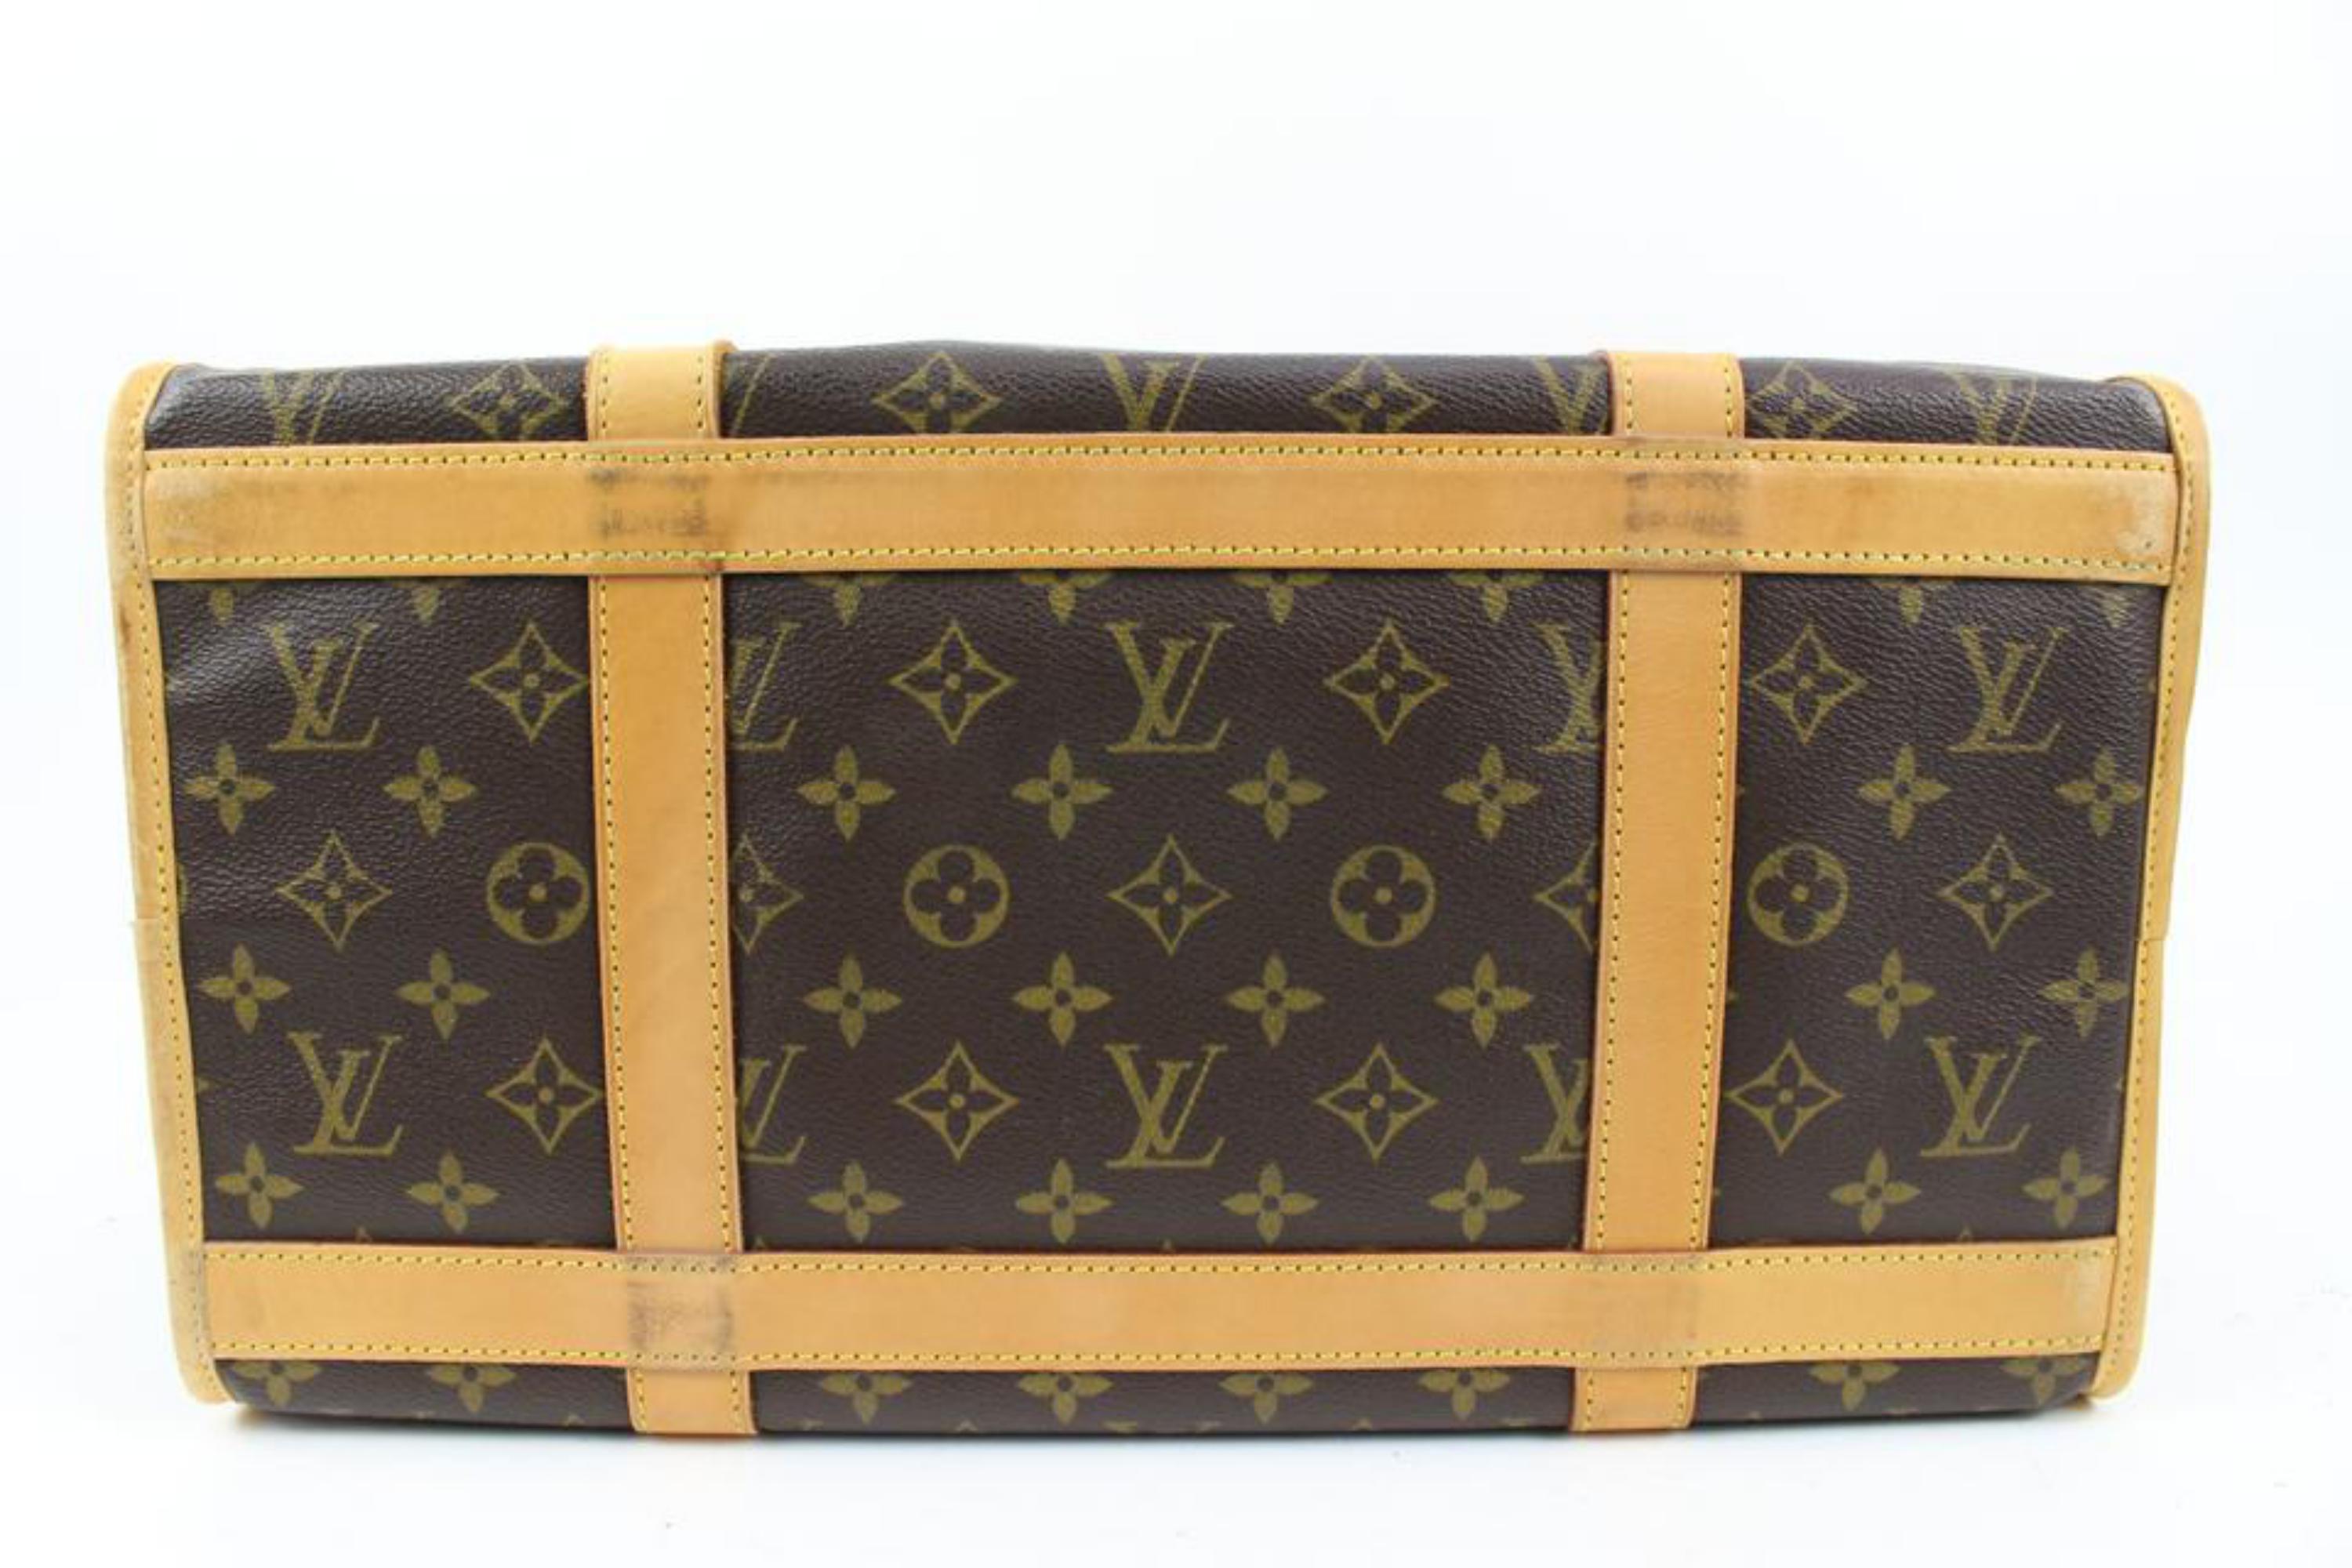 Louis Vuitton Monogram Pet Carrier 40 Sac Chien Dog Travel Bag 99lv215s 4